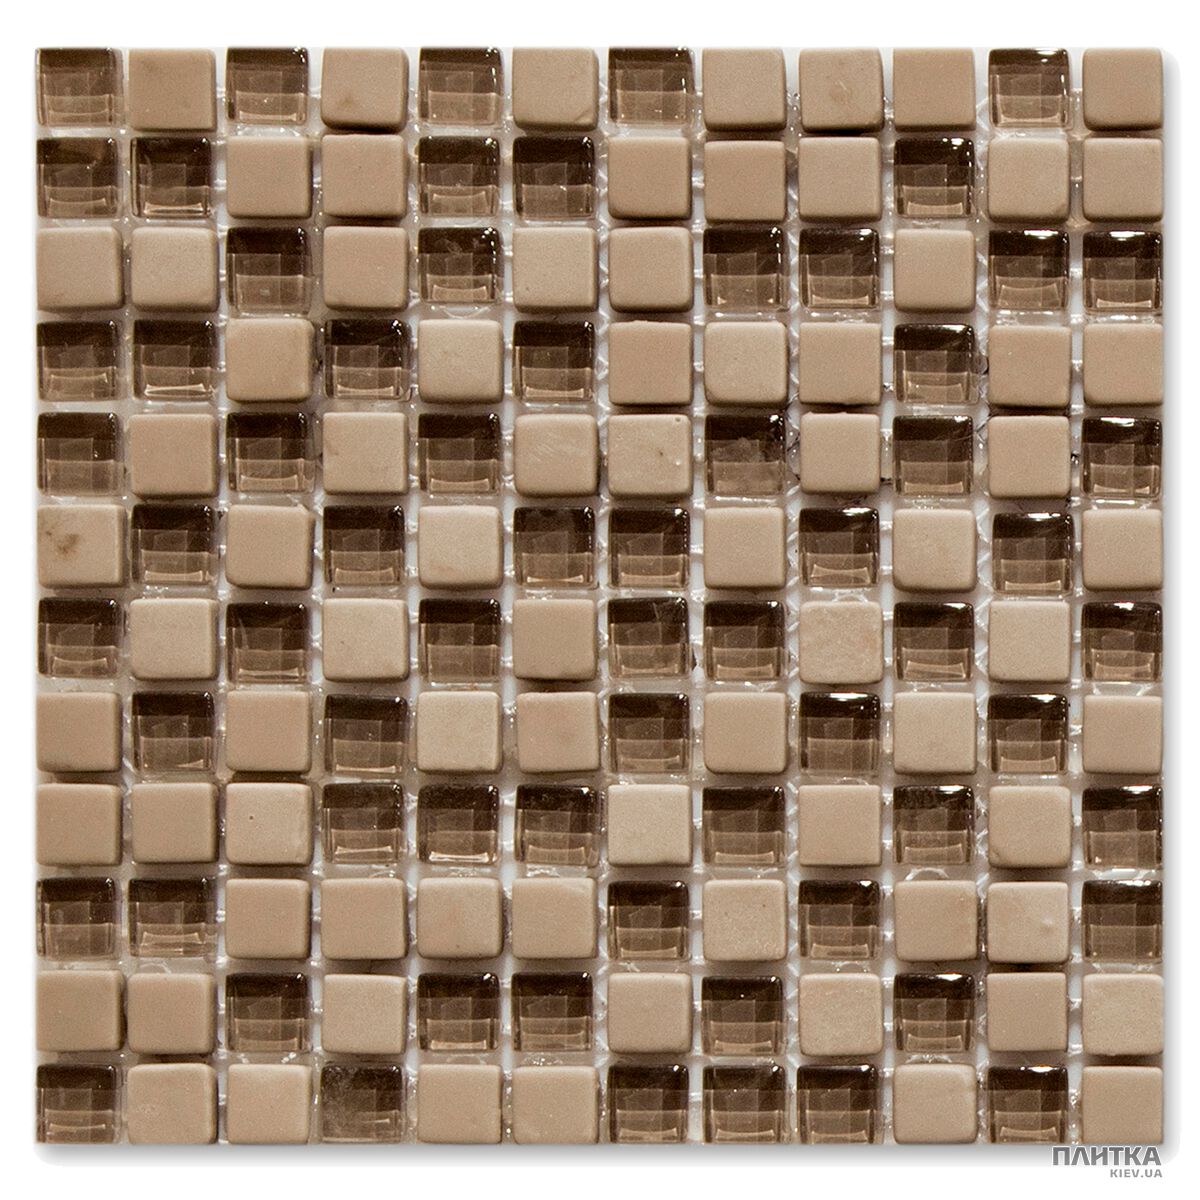 Мозаика Mozaico de Lux CL-MOS CL-MOS WT006 коричневый